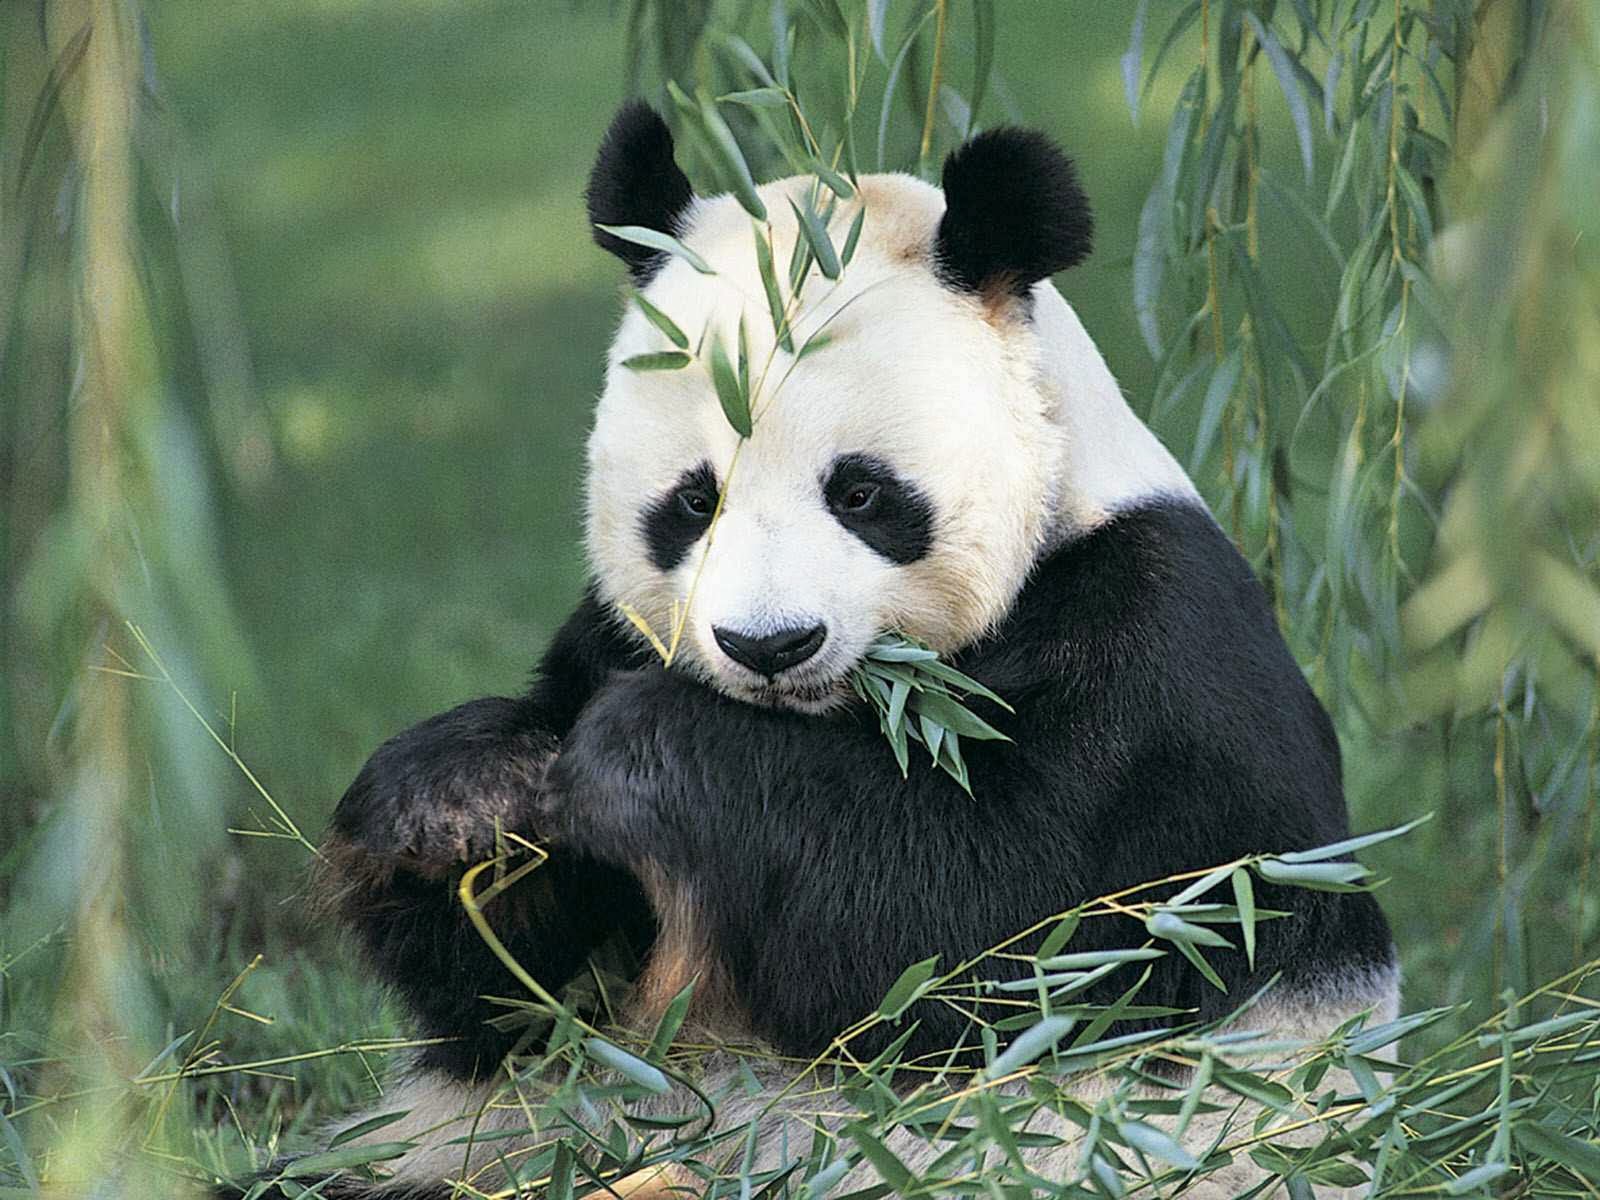 gambar panda